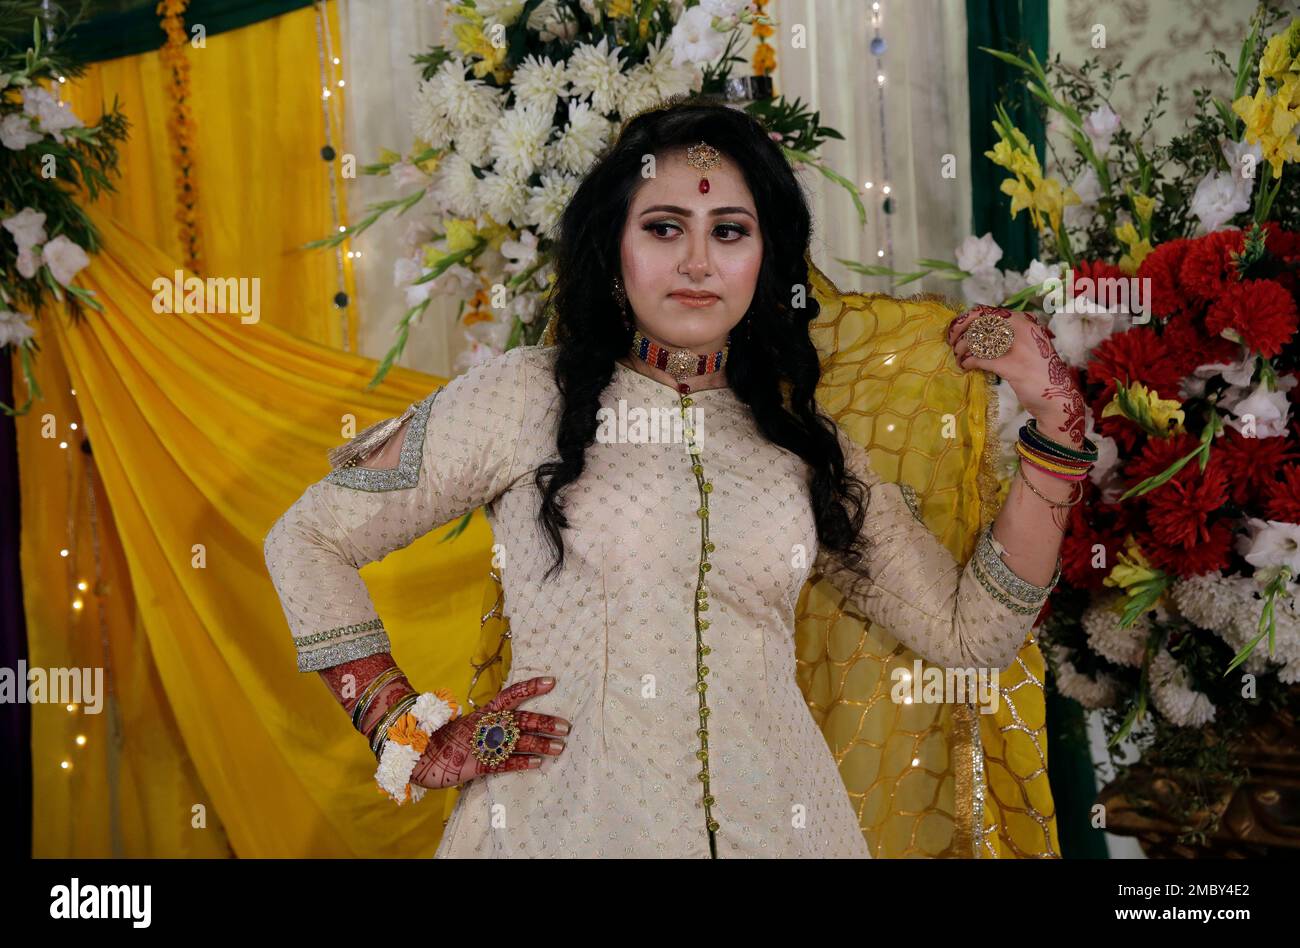 Pakistani Weddings on X: 